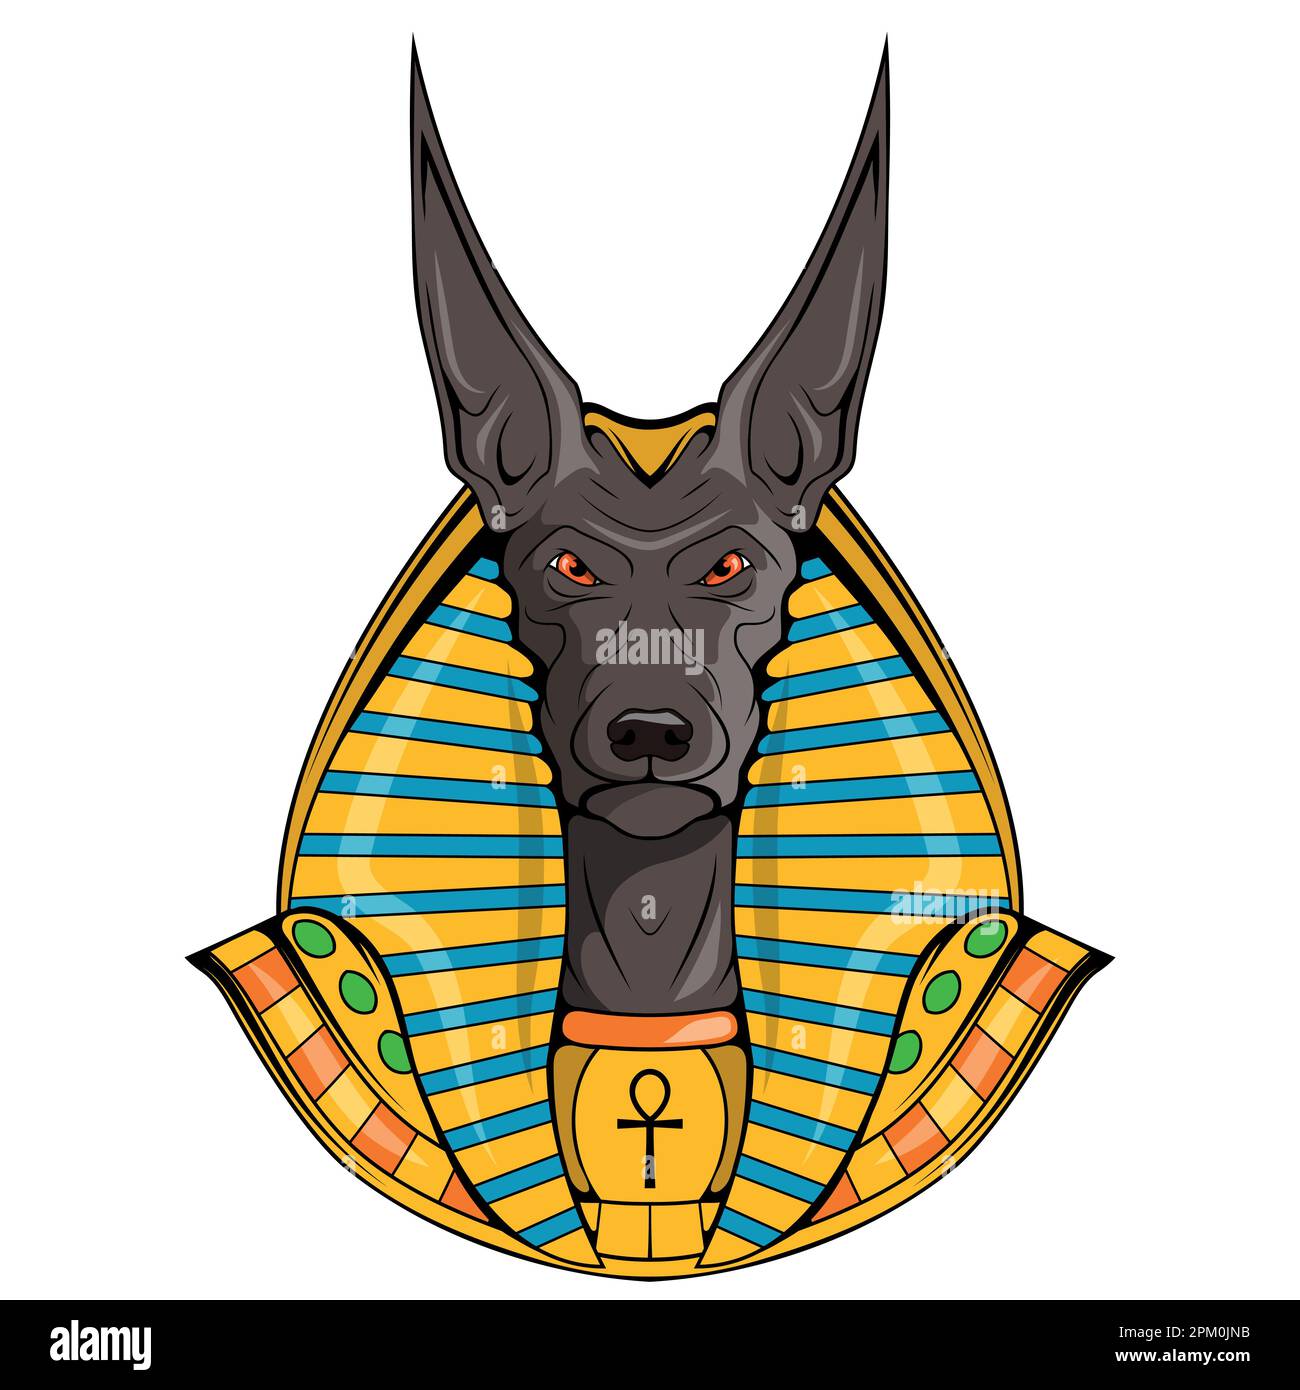 Anubis Vector Illustration Of A Jackal Ancient Egyptian God Of Death Egyptian Mythology Stock